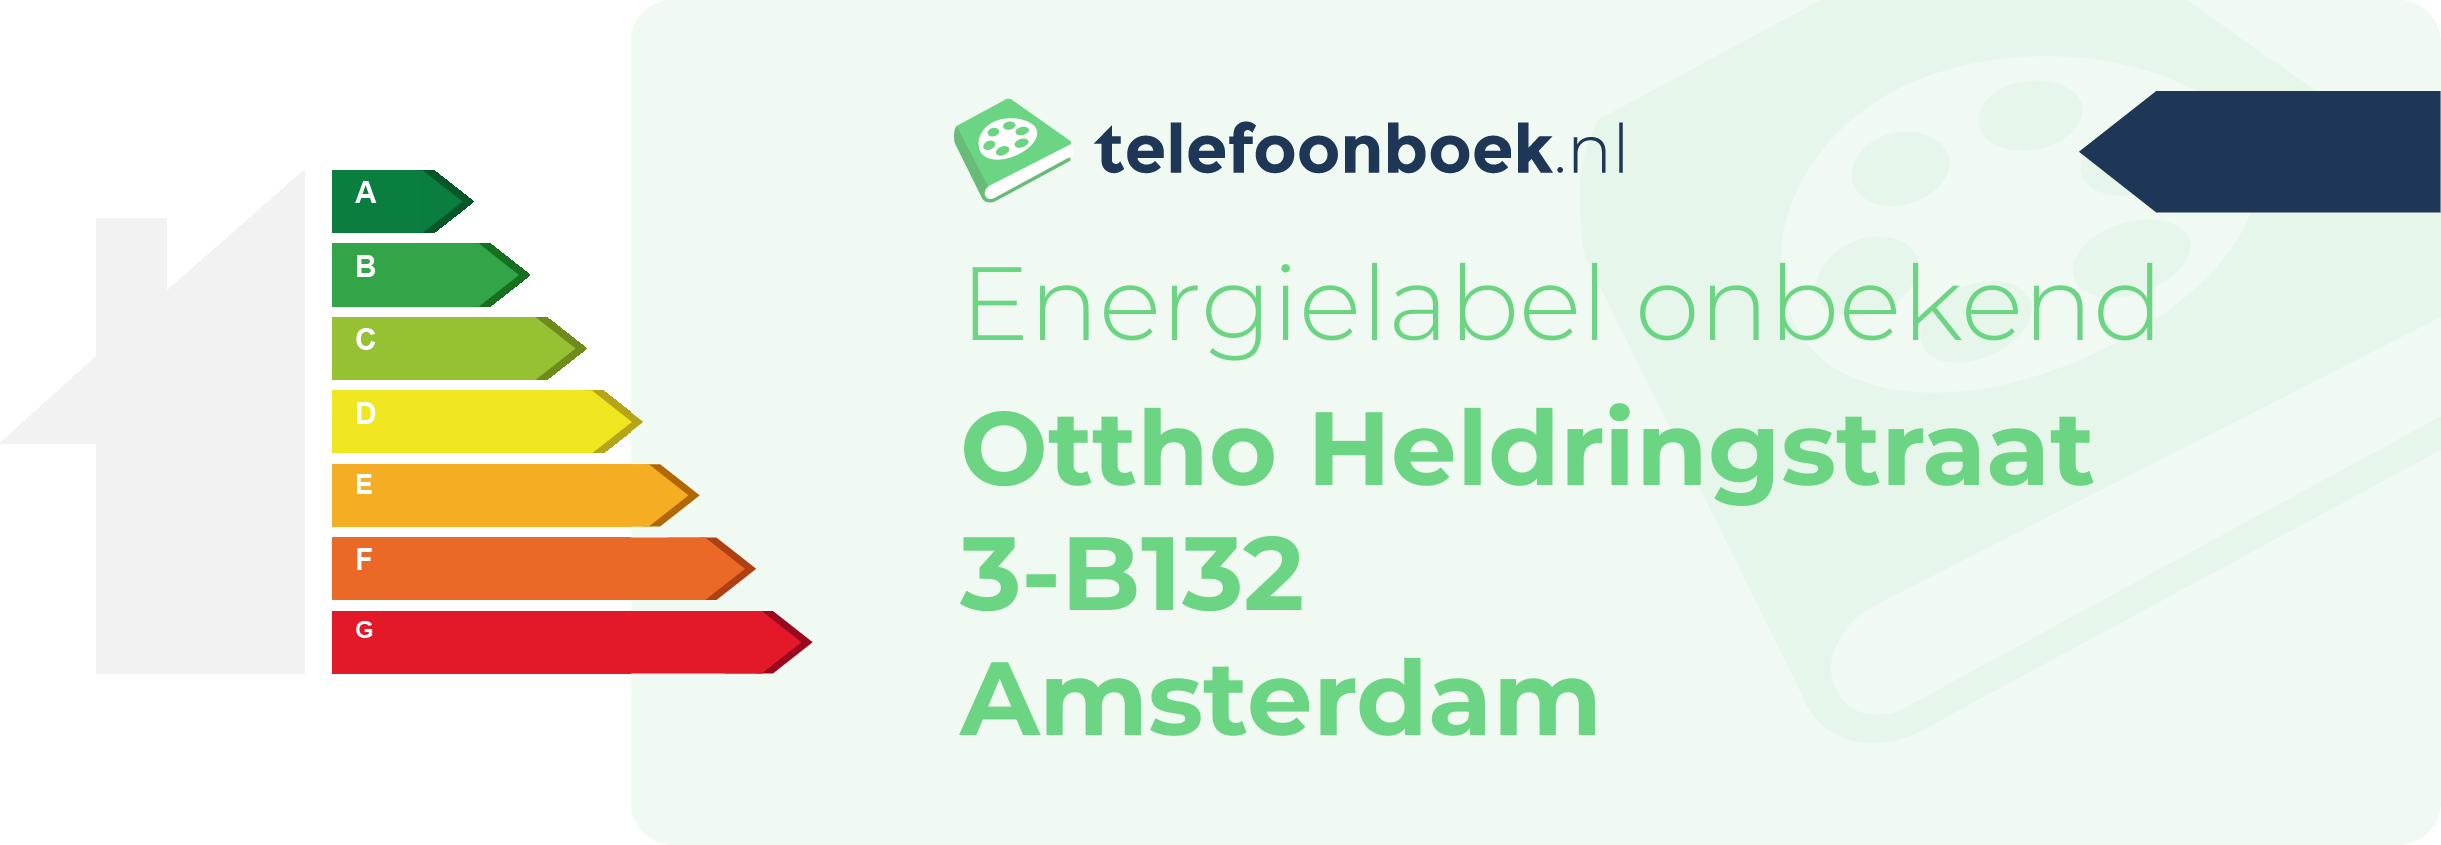 Energielabel Ottho Heldringstraat 3-B132 Amsterdam